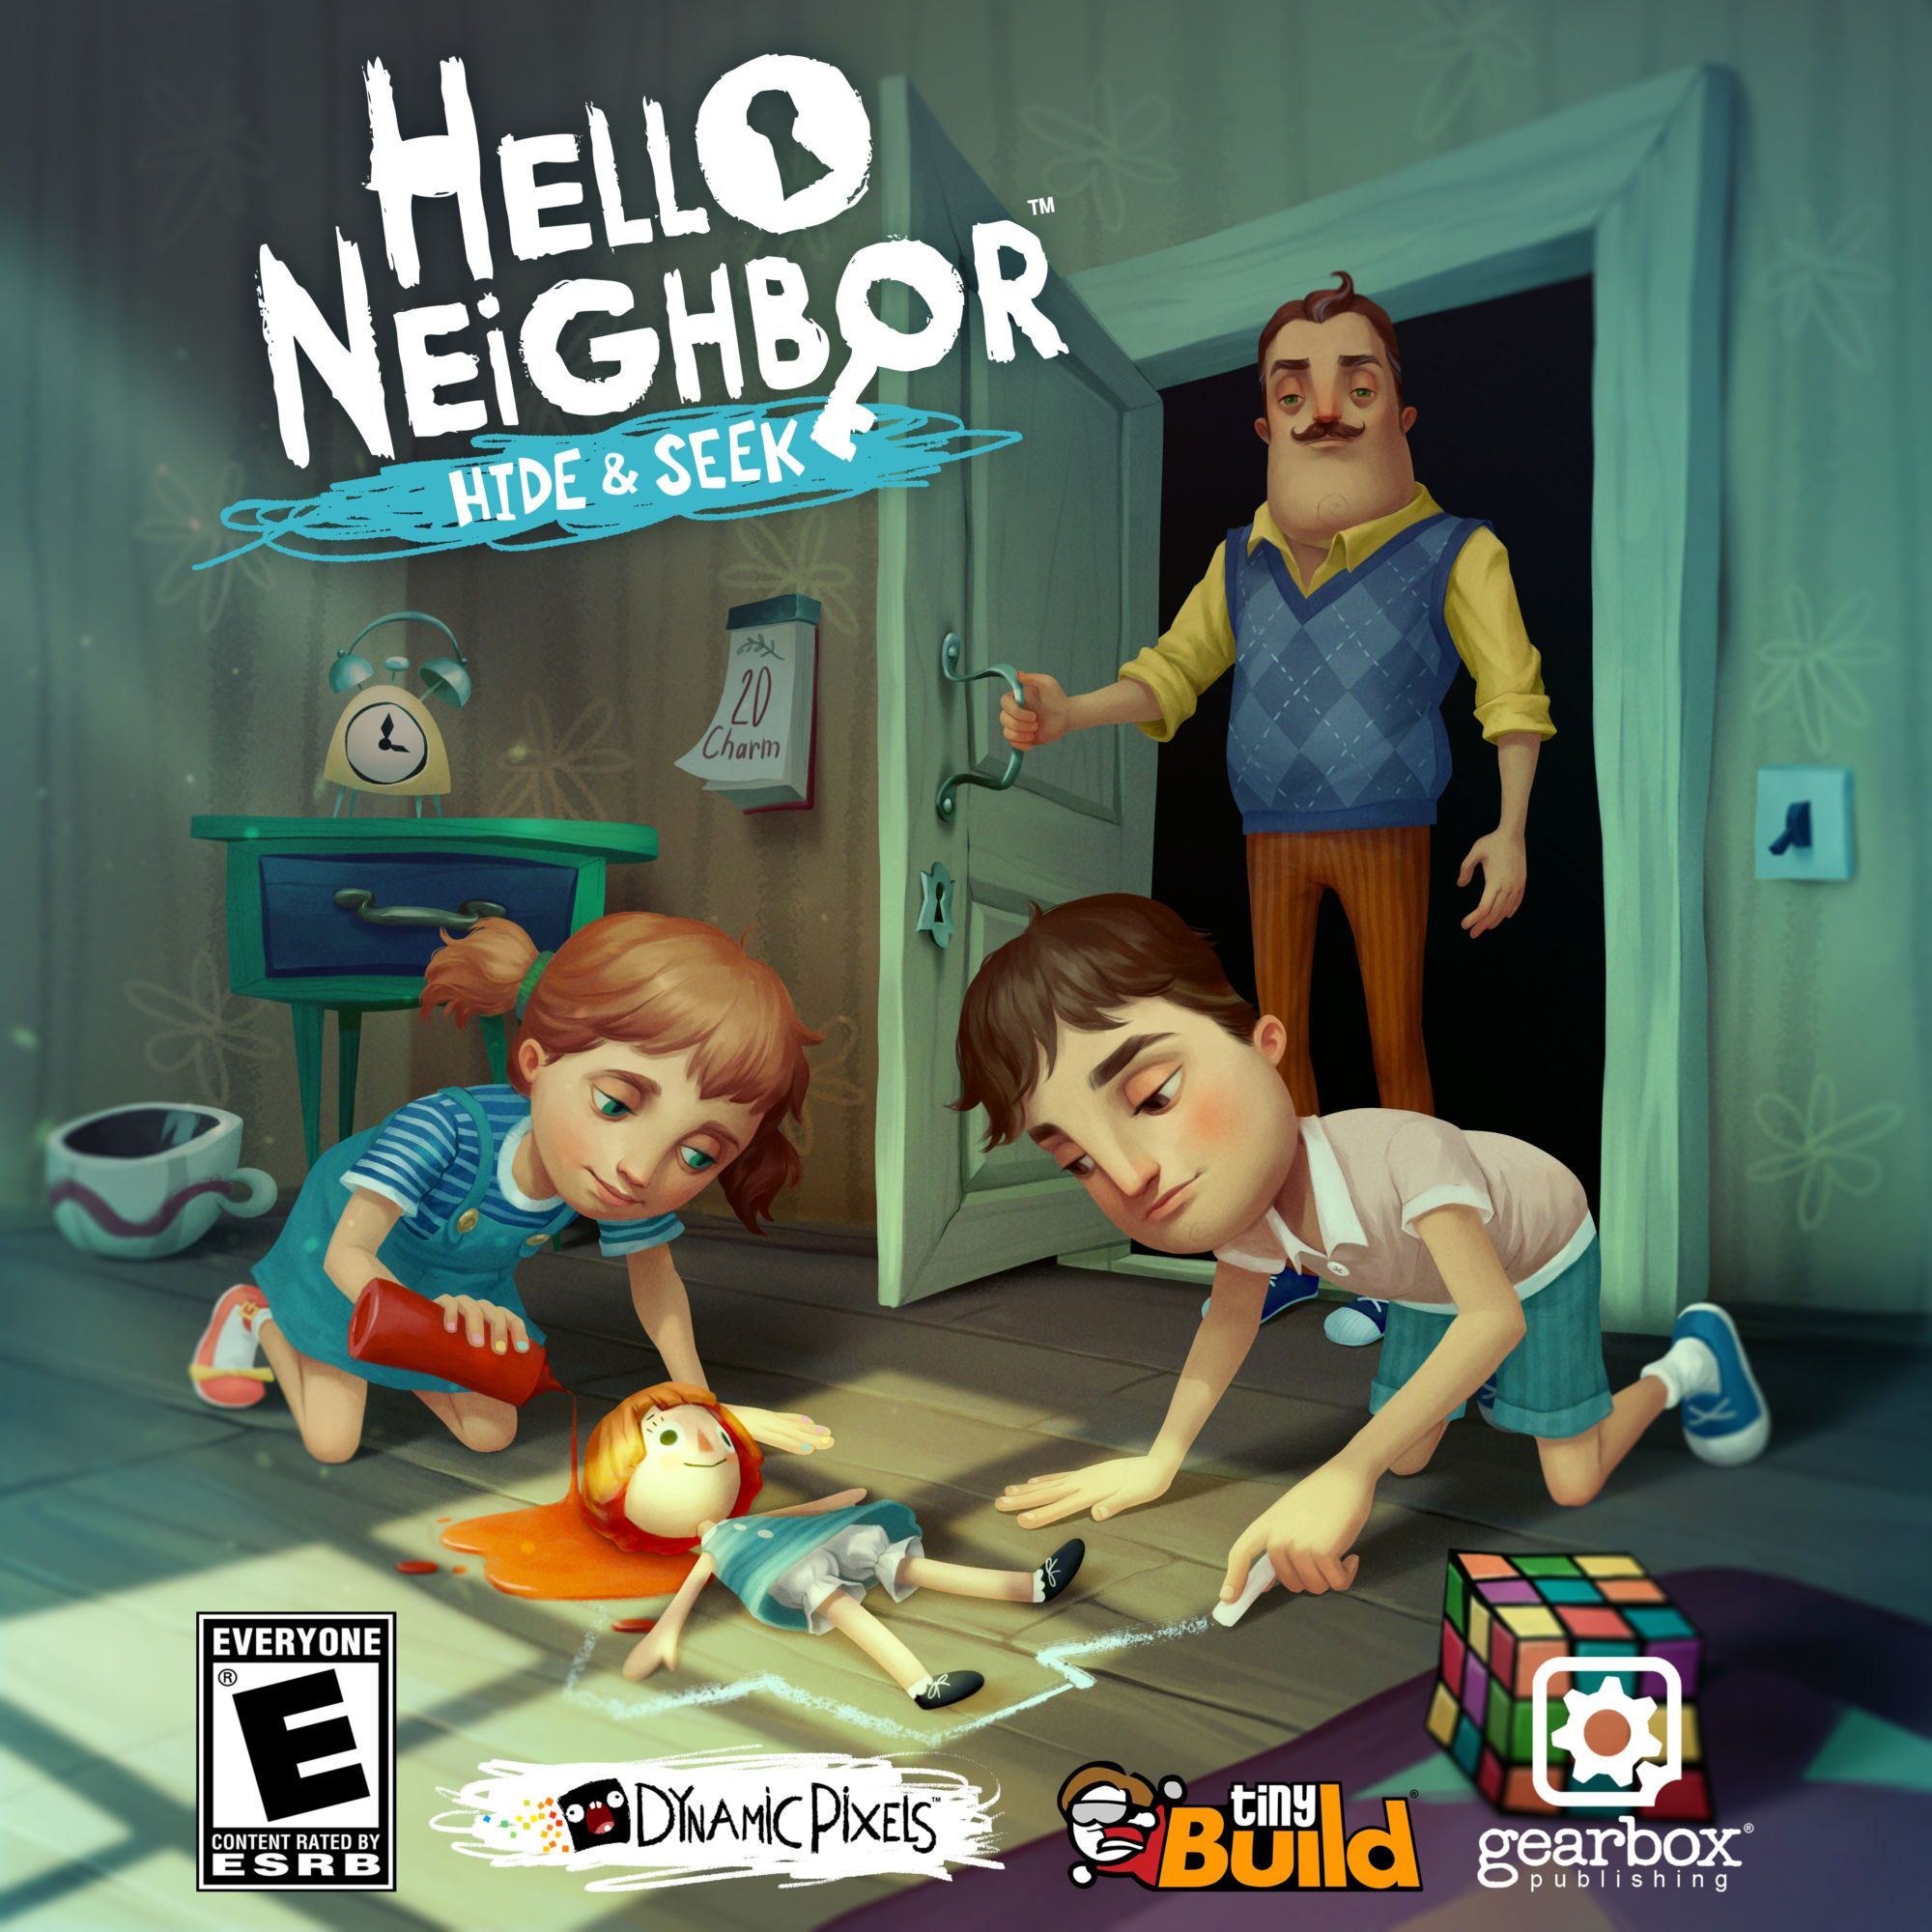 Привет сосед прятки дети. Hello Neighbor диск. Привет сосед Hide and seek. Hello Neighbor ПРЯТКИ. Диск с игрой привет сосед.